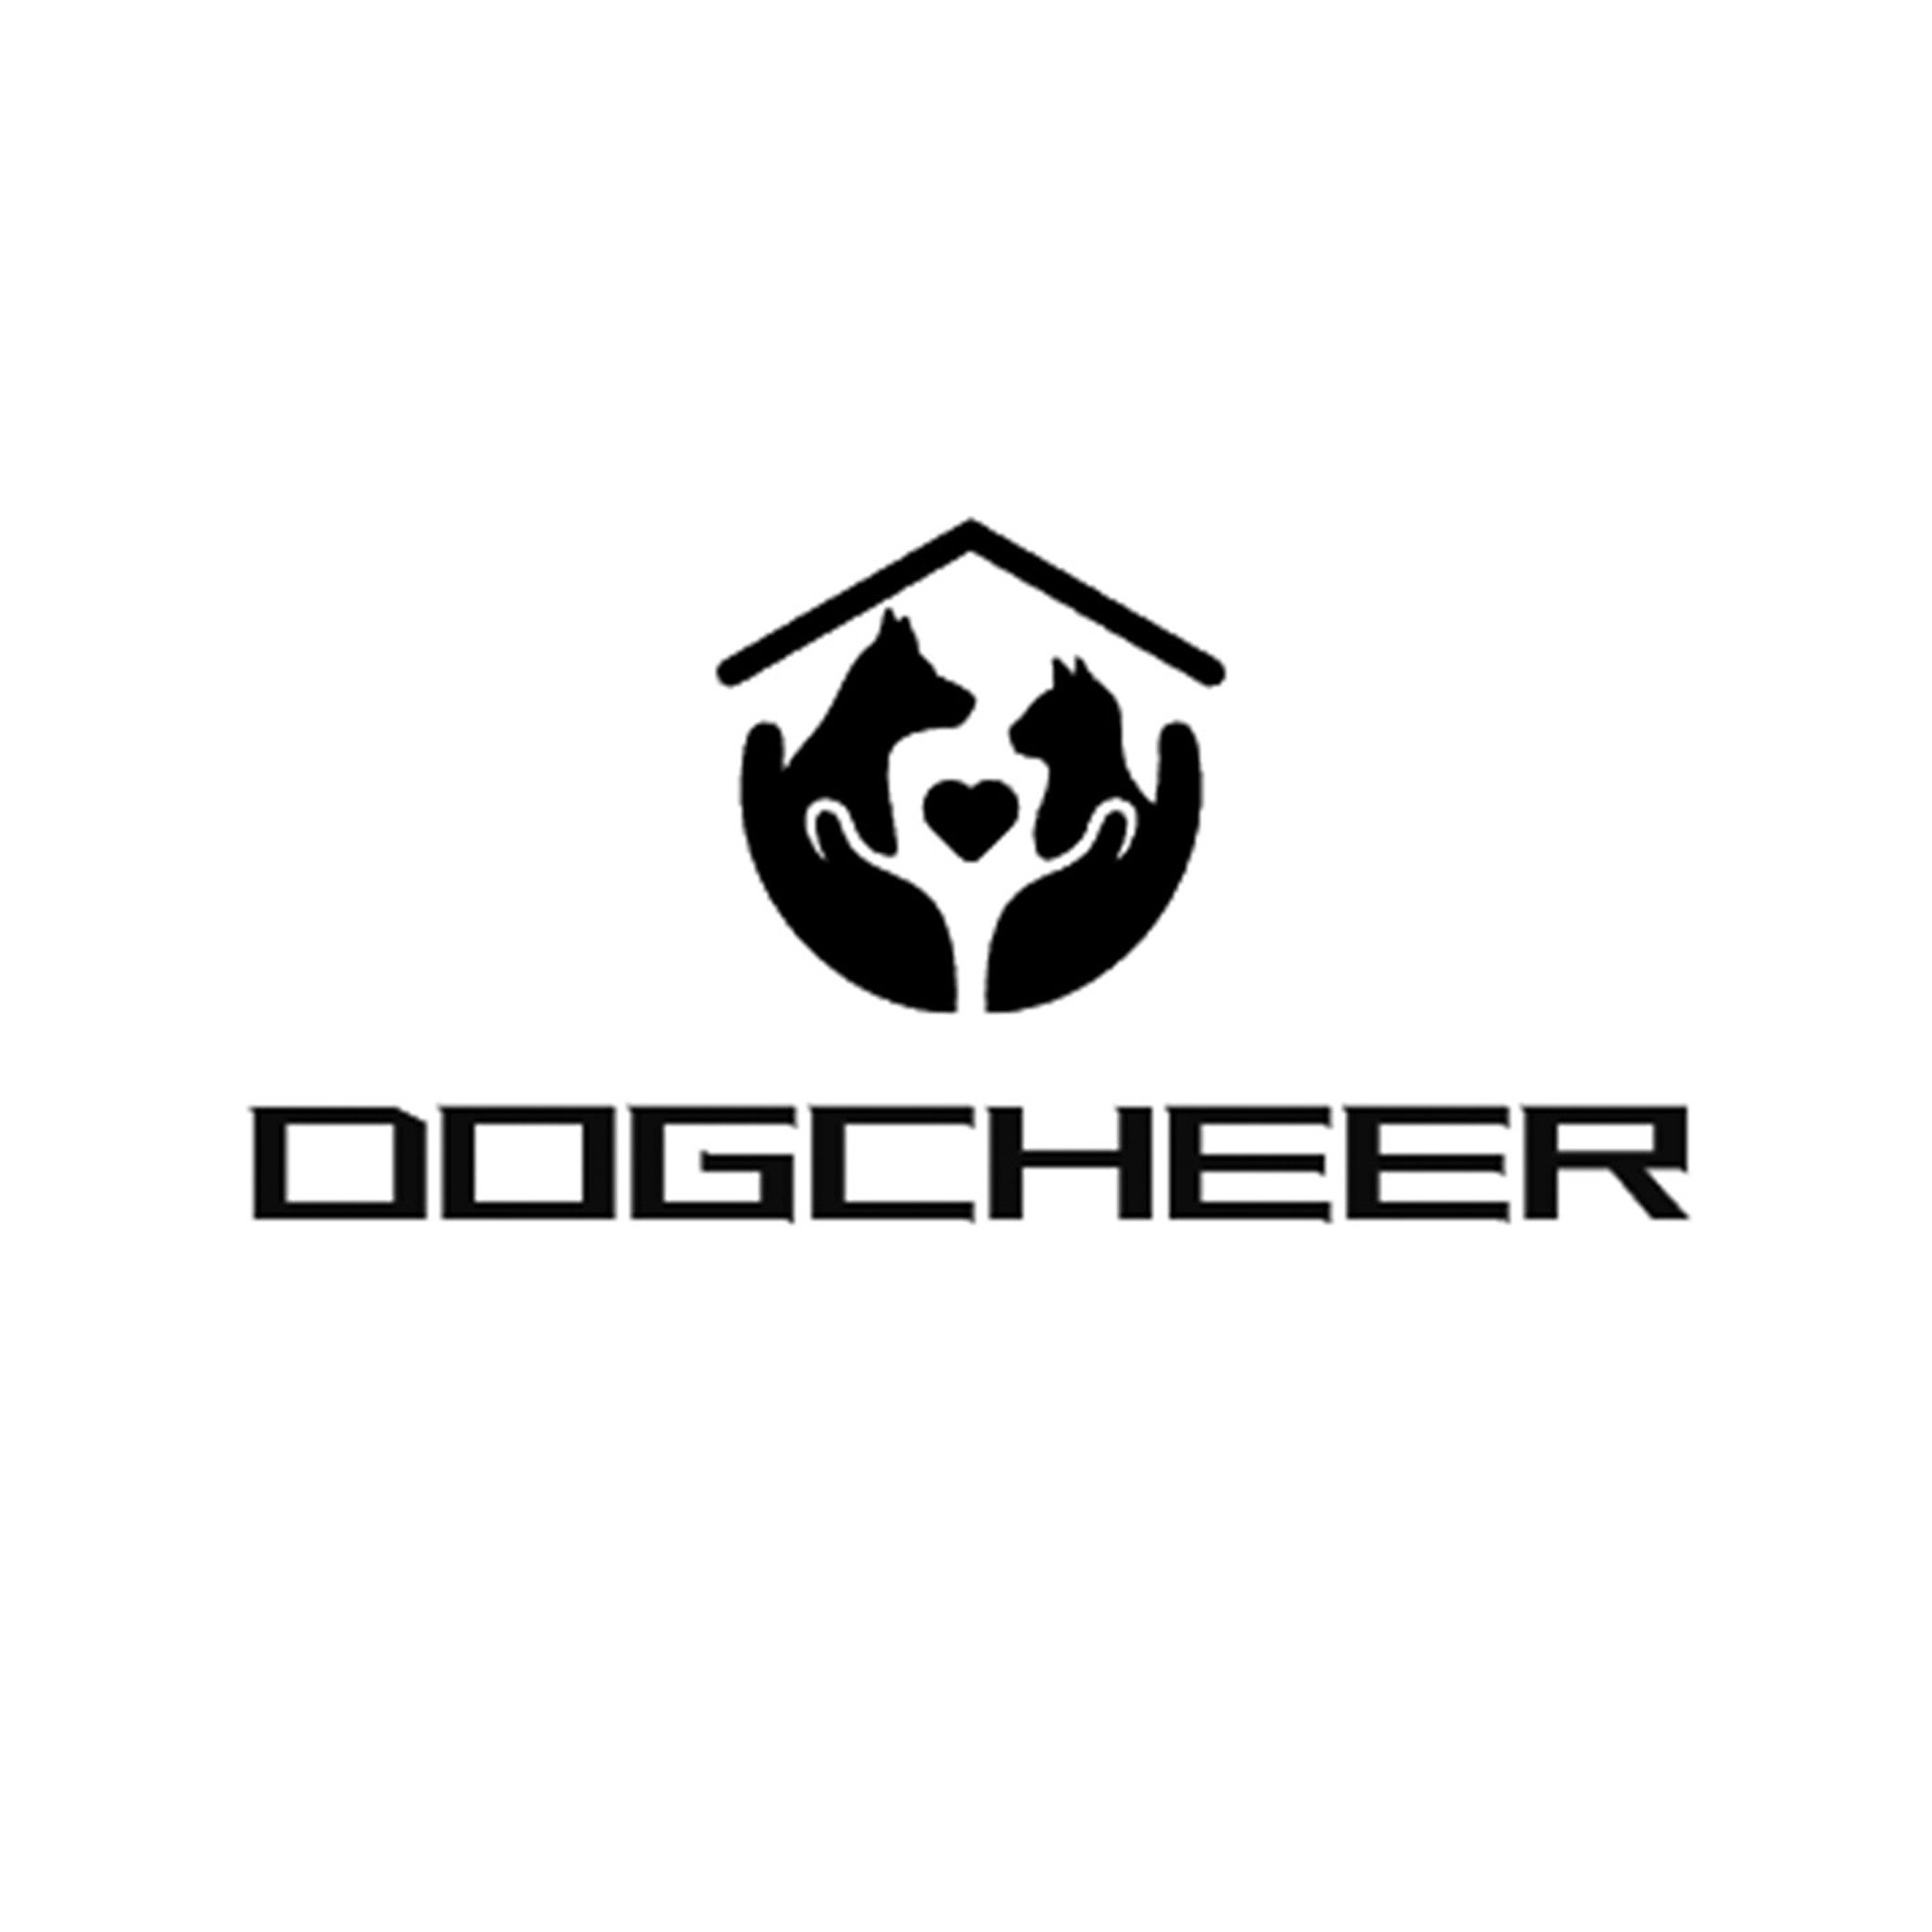  DOGCHEER